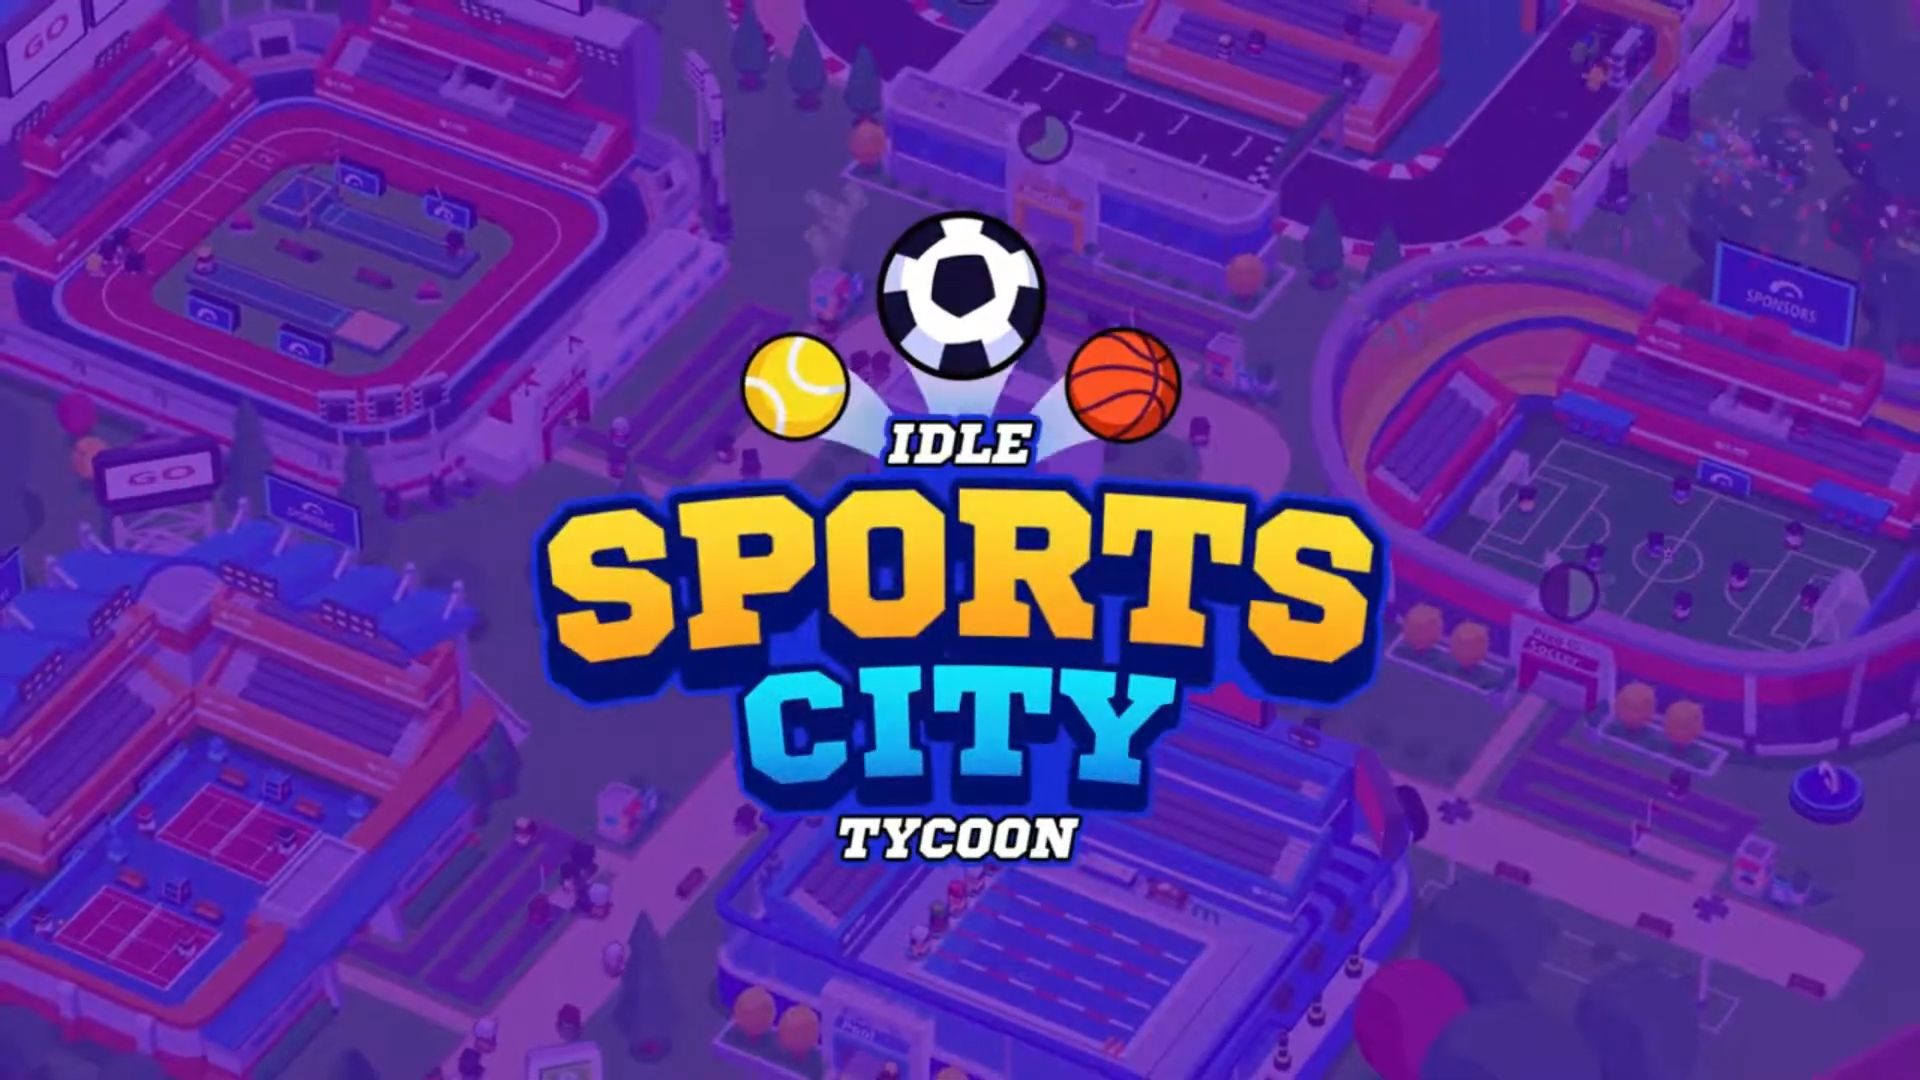 Sports City Tycoon - Idle Sports Games Simulator screenshot 1